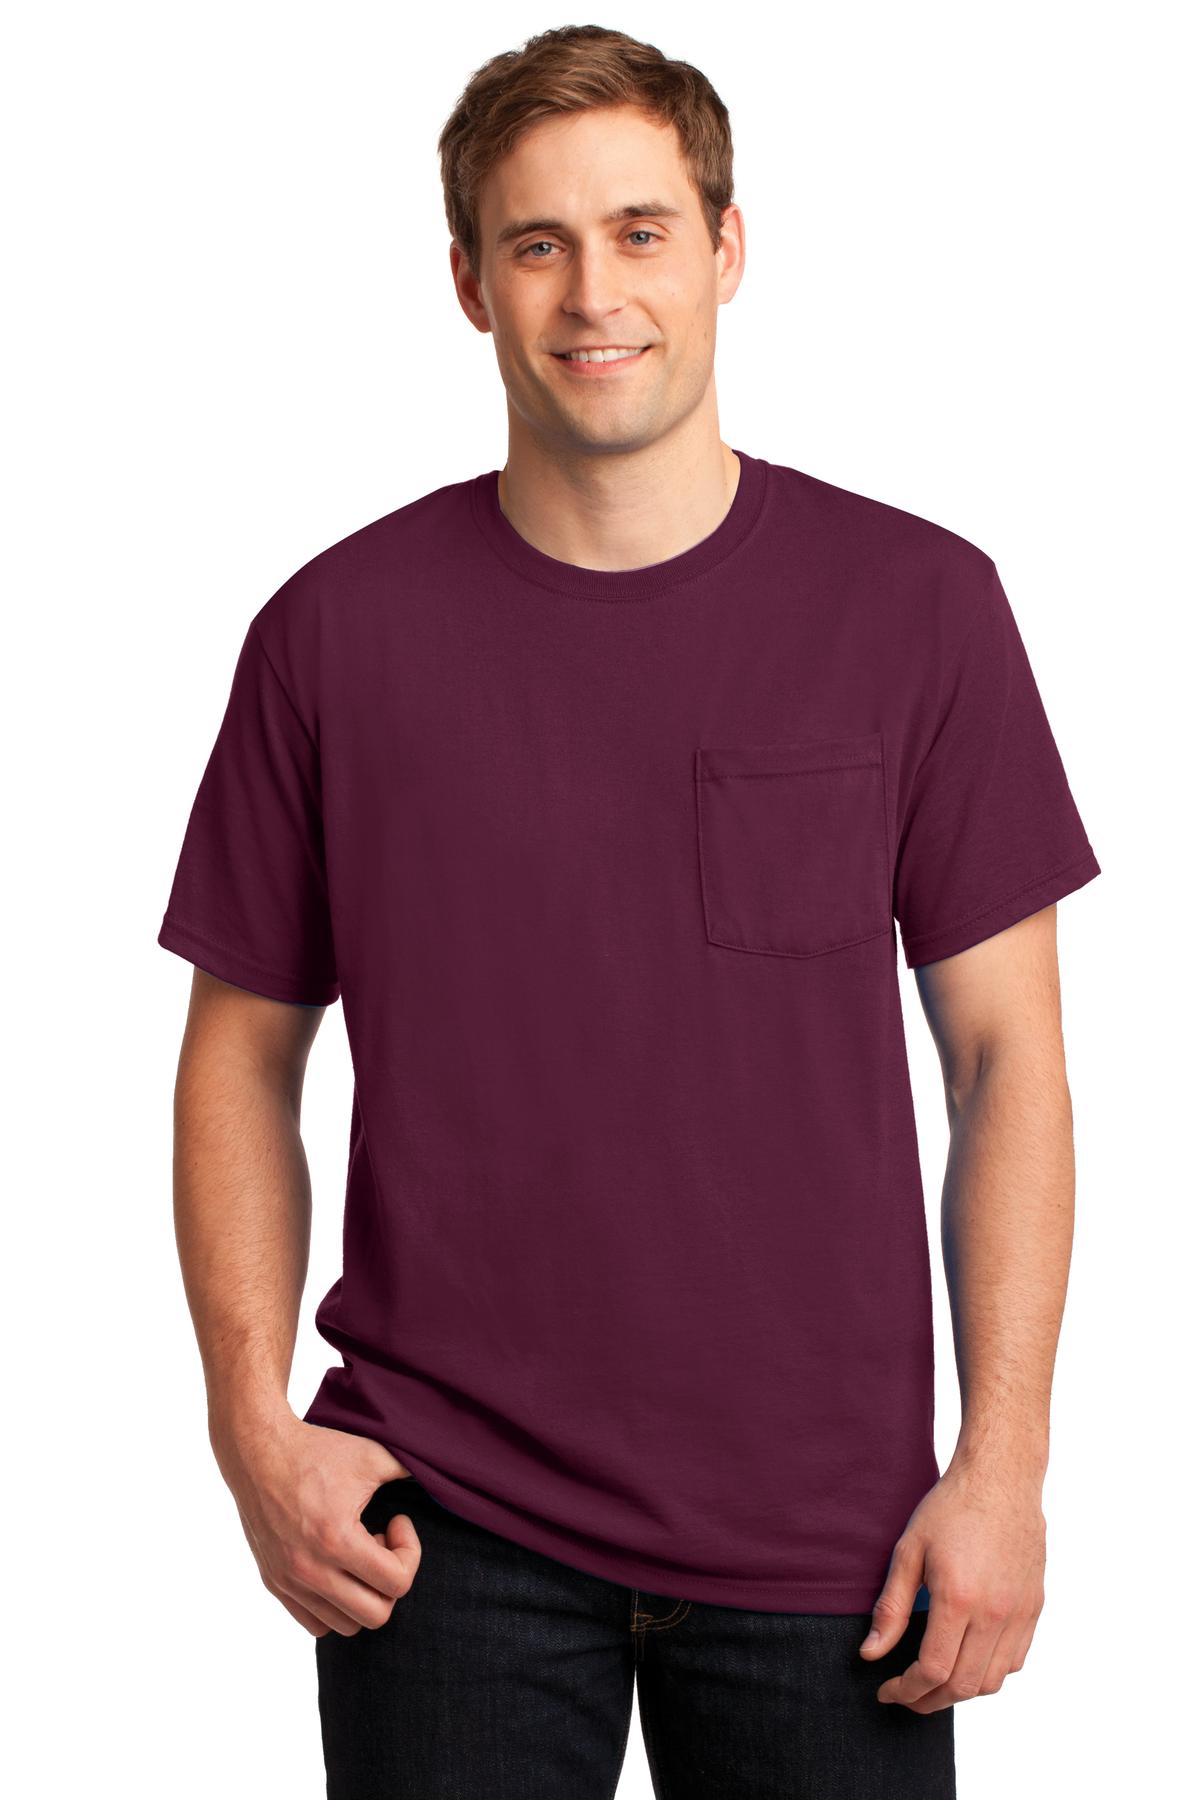 JERZEES® - Dri-Power® 50/50 Cotton/Poly Pocket T-Shirt. 29MP [Maroon] - DFW Impression